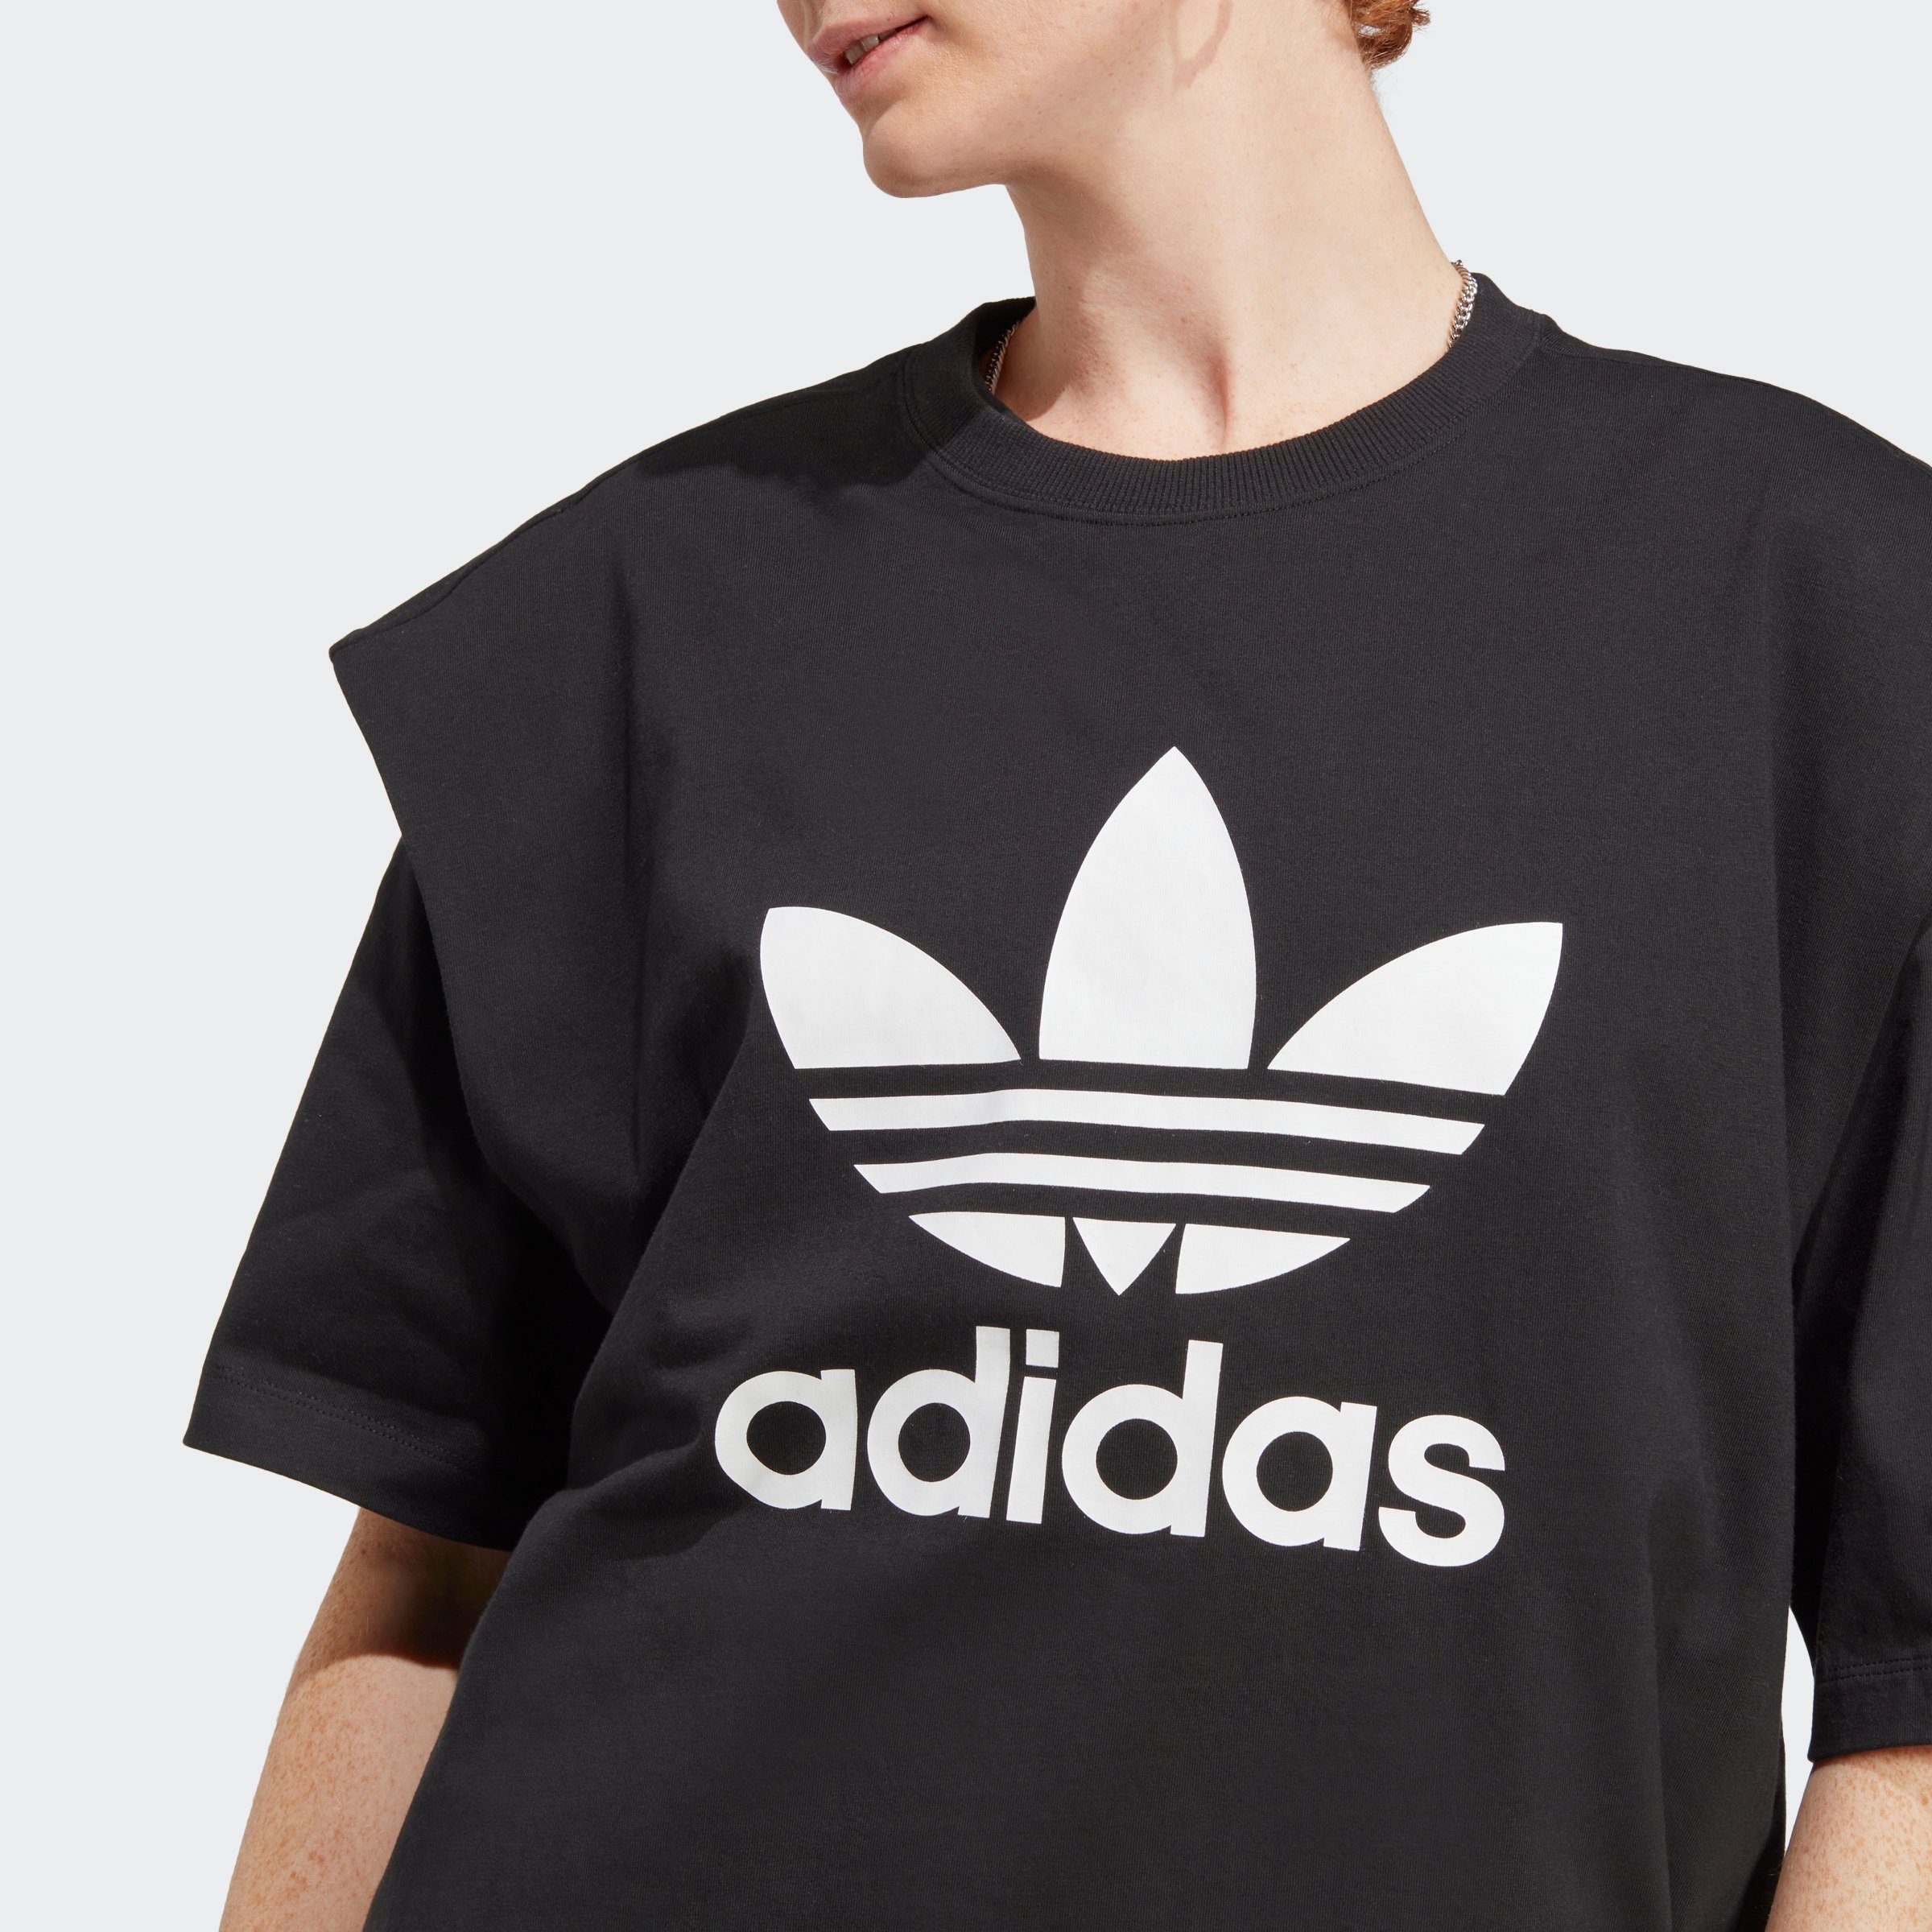 adidas T-Shirt ORIGINAL Originals ALWAYS Black